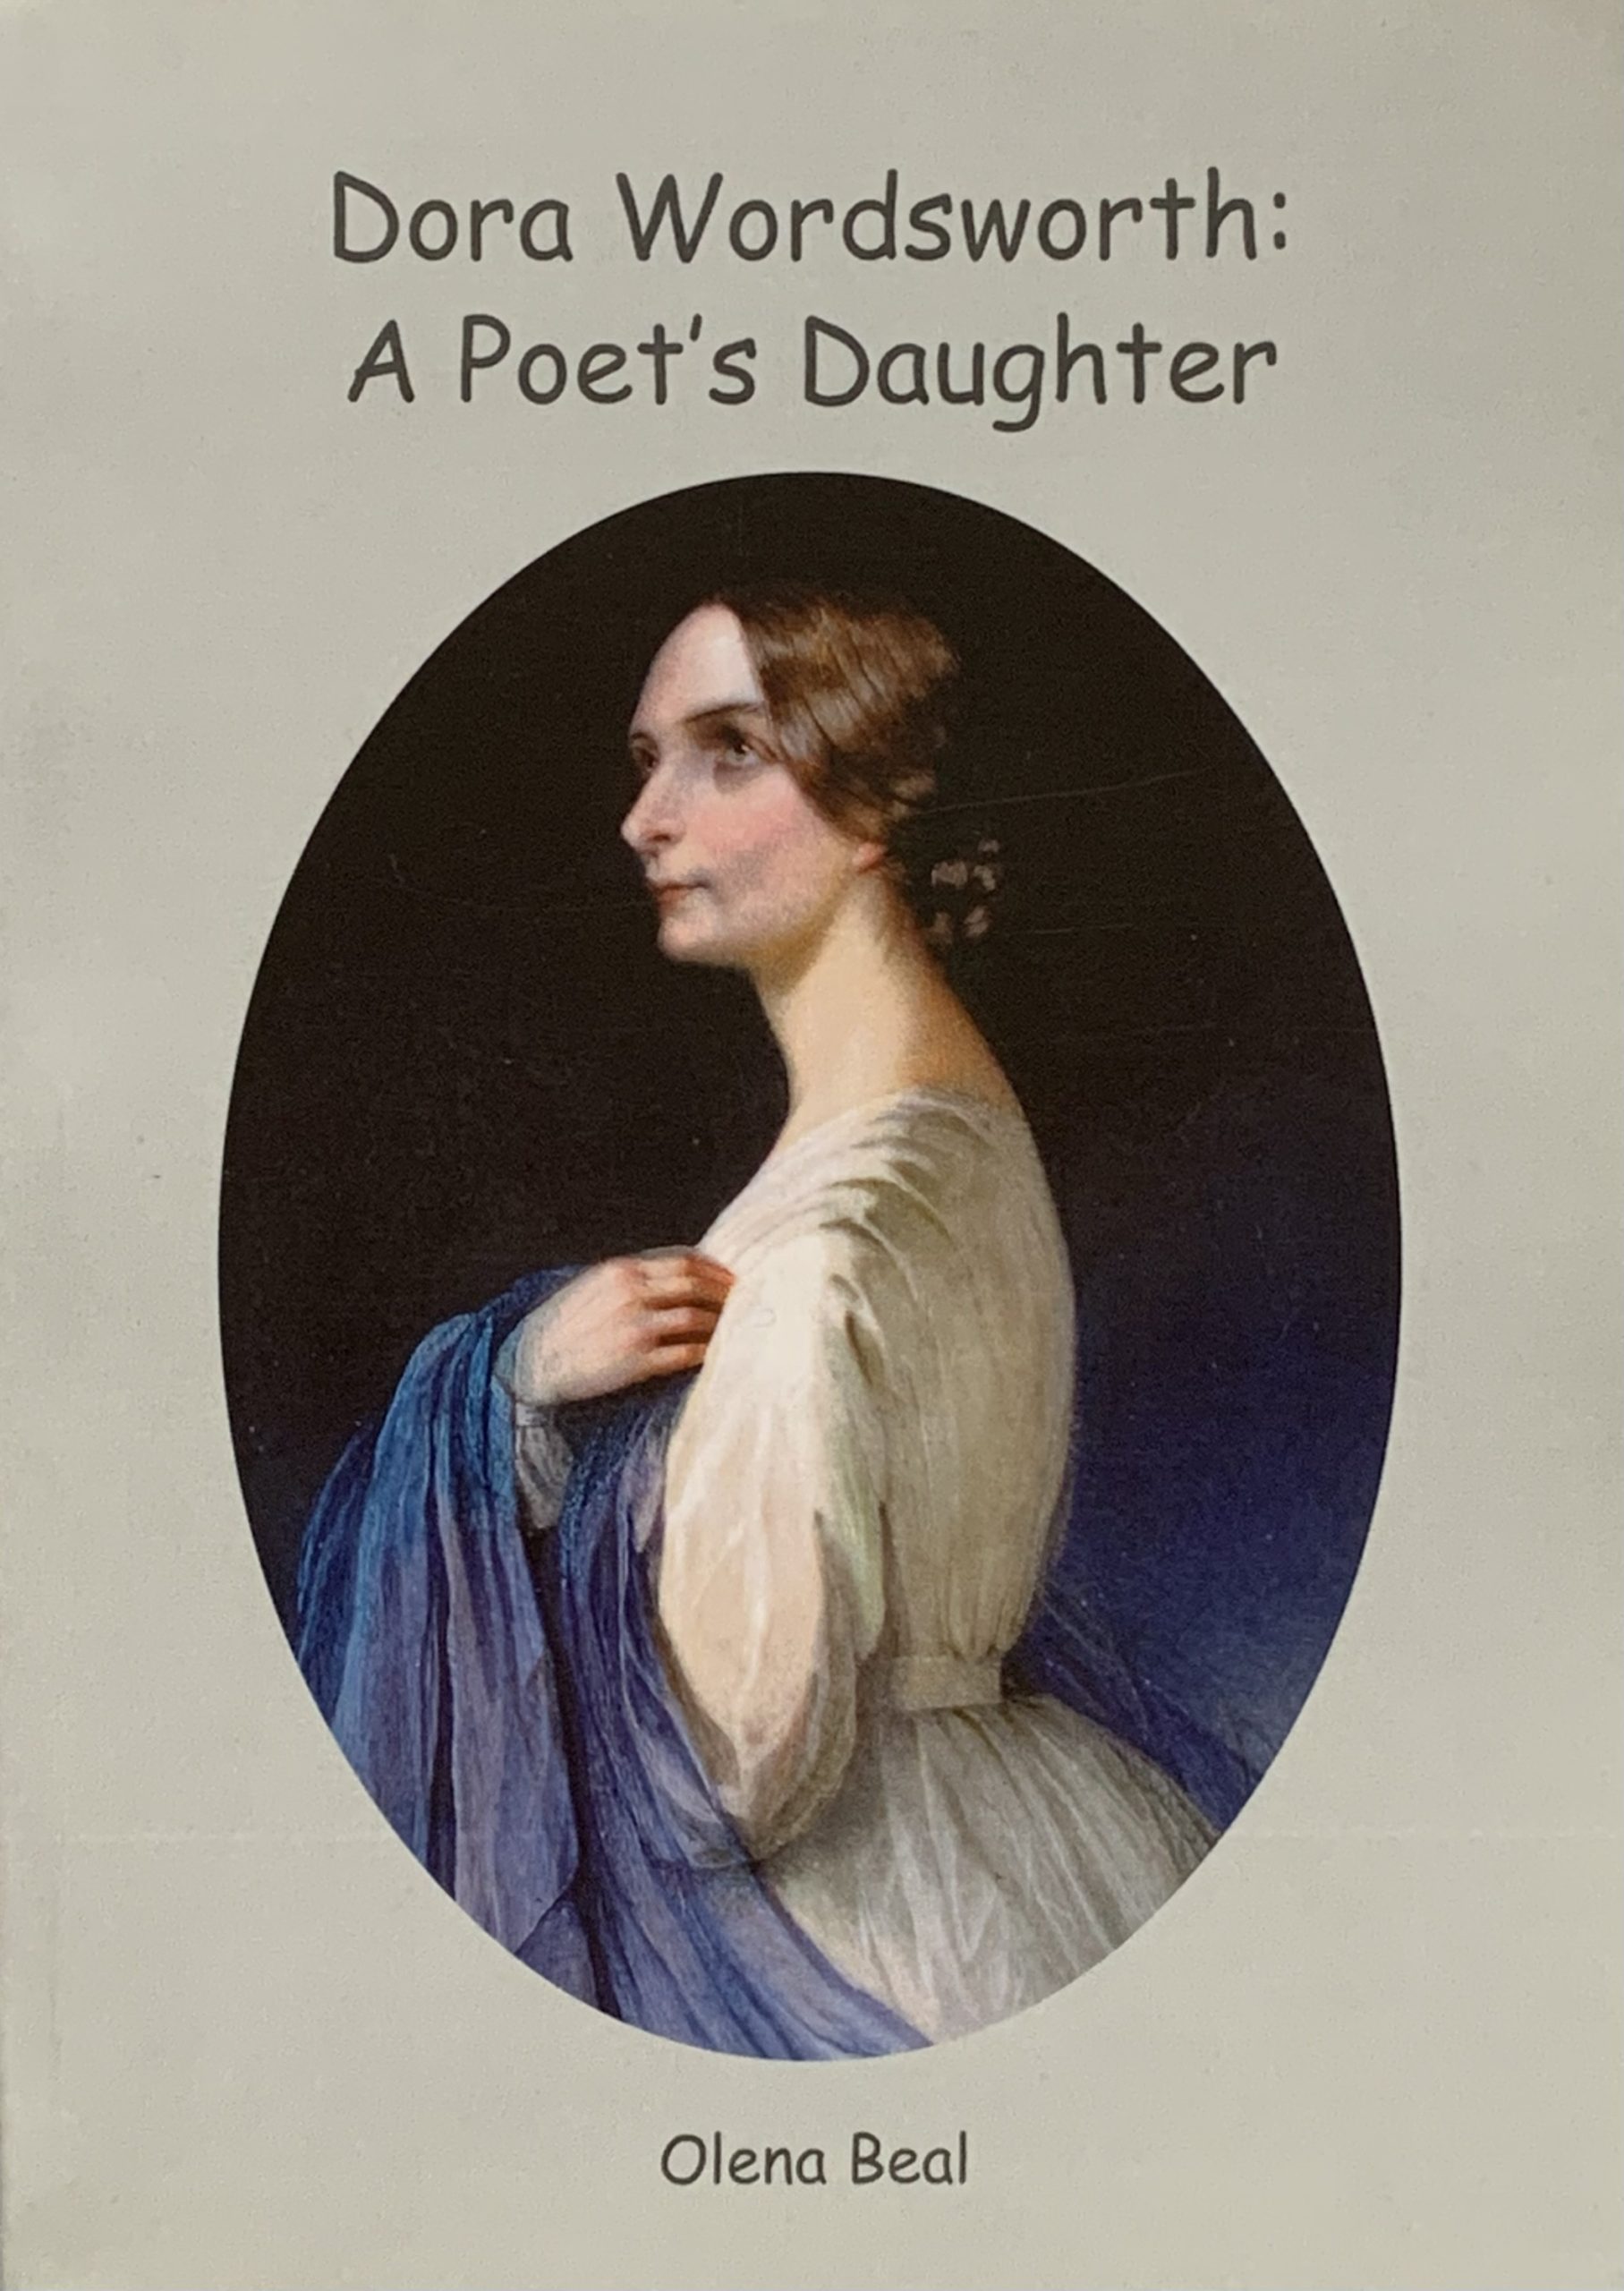 Dora Wordsworth: A Poet's Daughter By Olena Beal